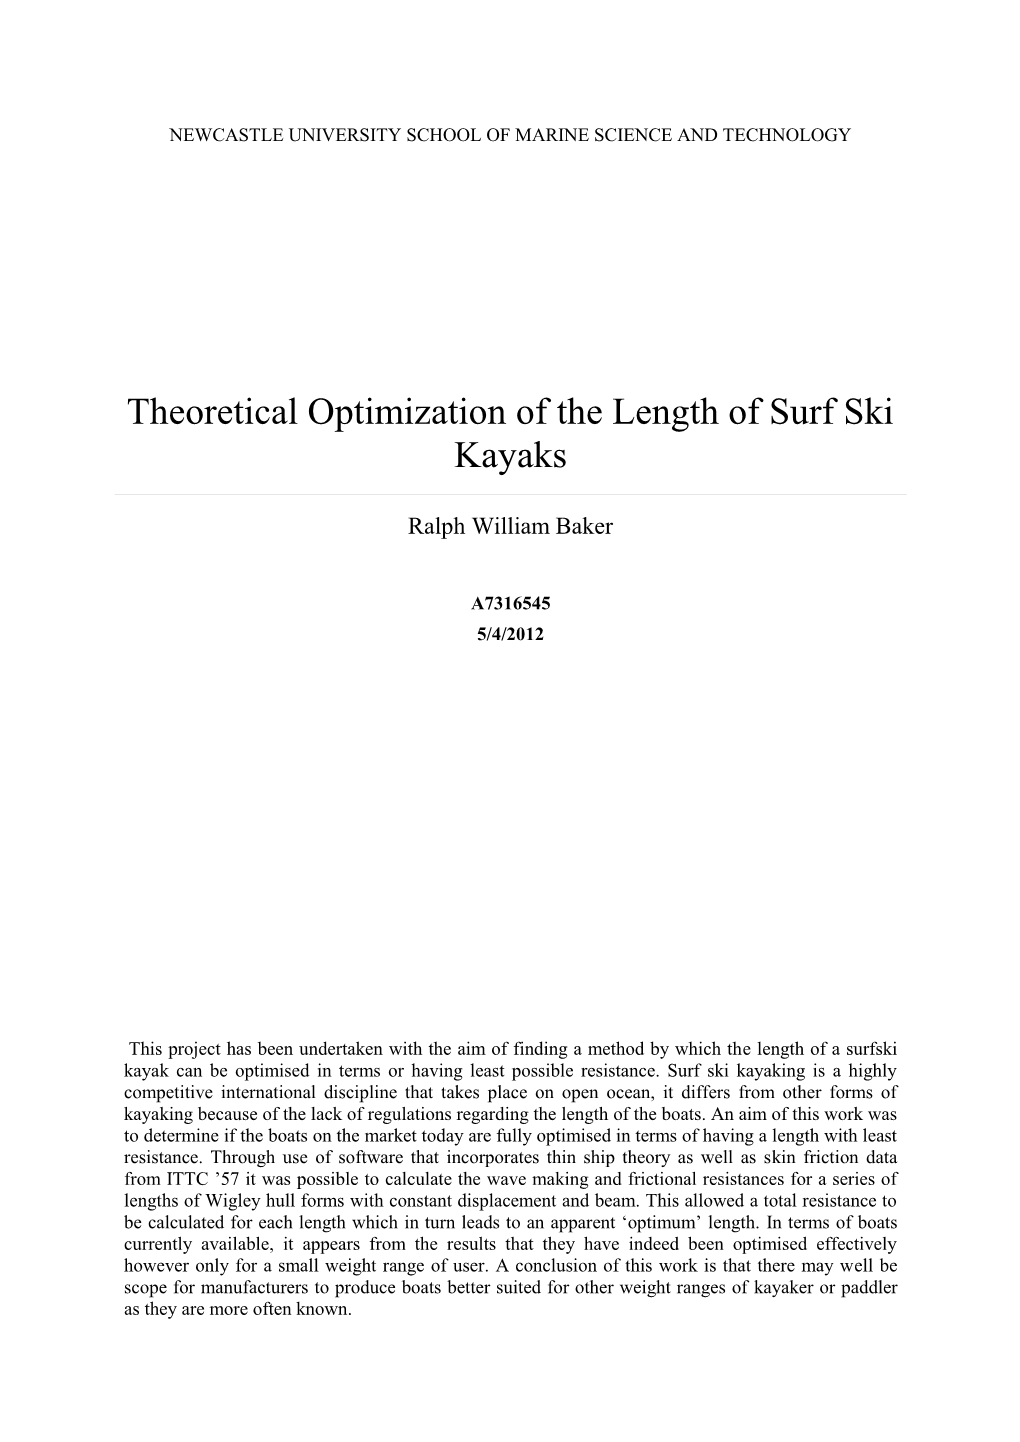 Theoretical Optimization of the Length of Surf Ski Kayaks